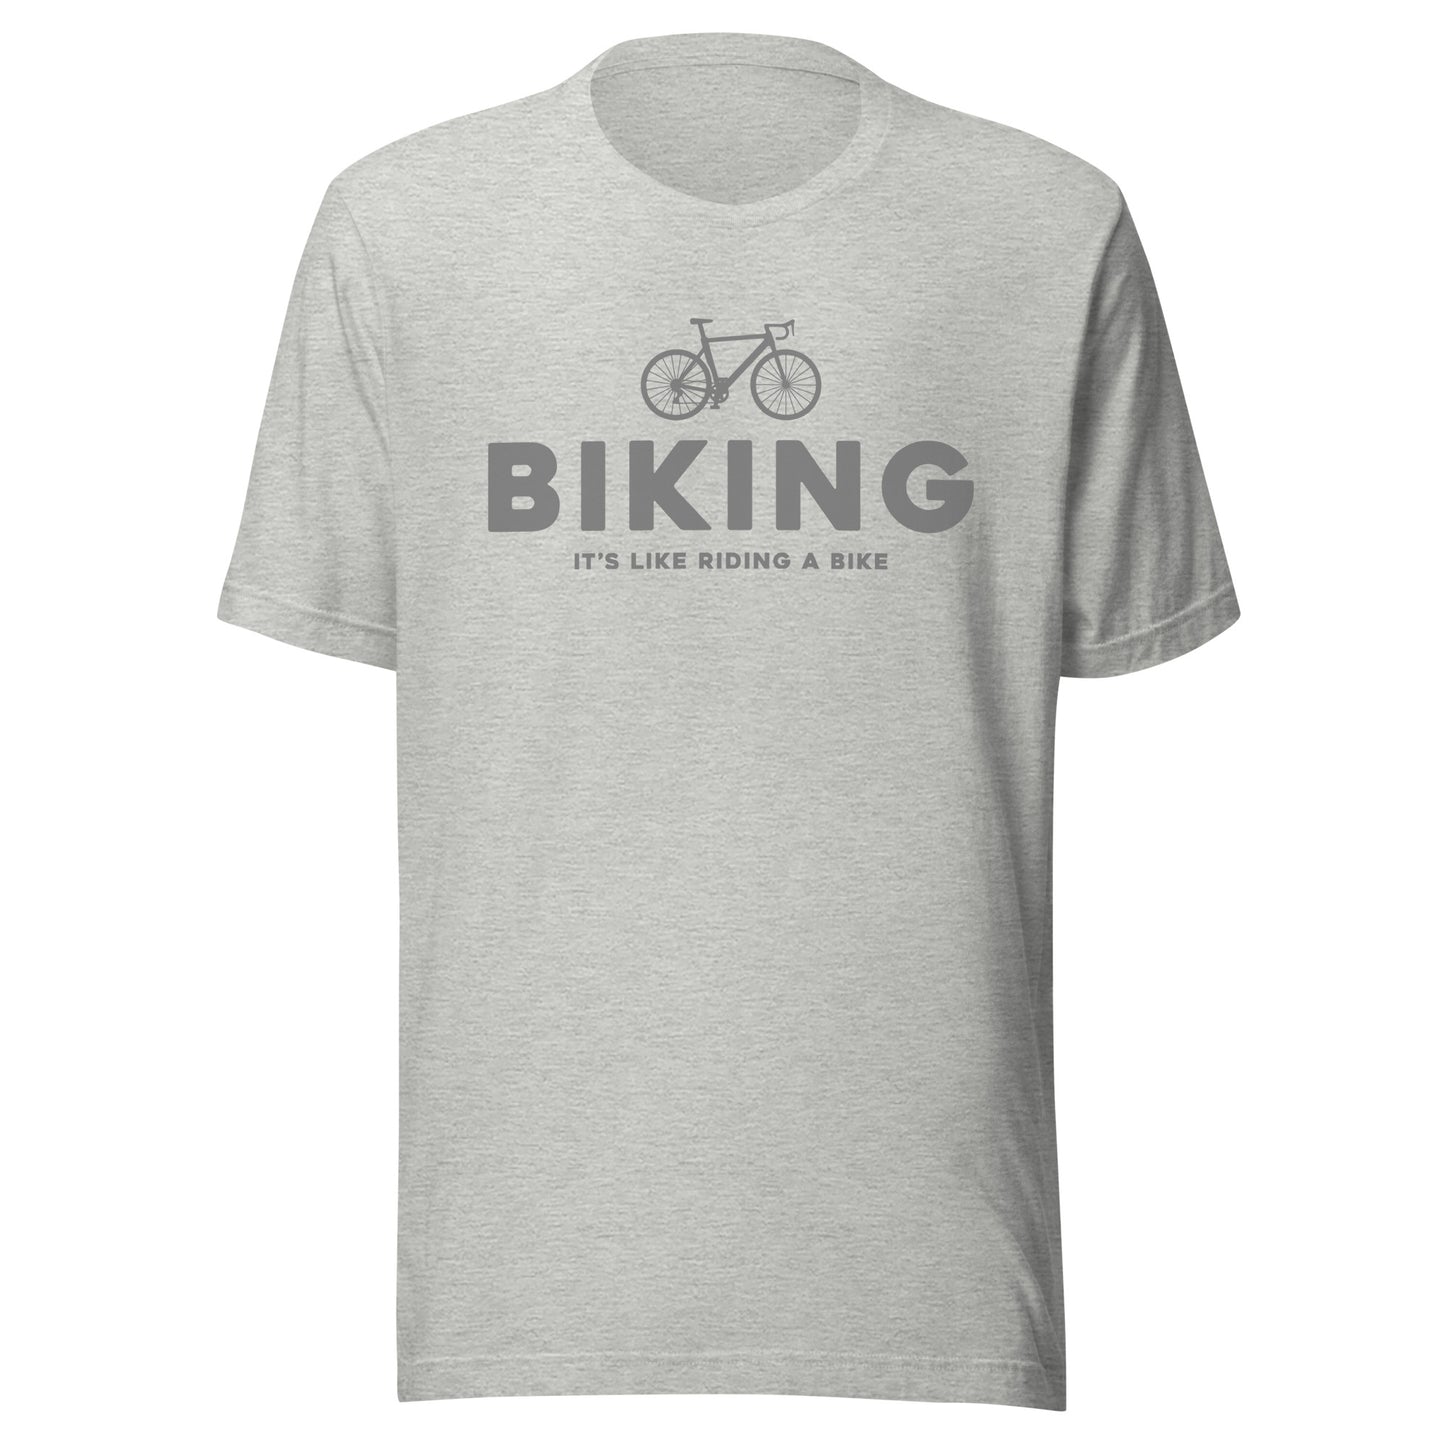 Like Riding a Bike Shirt, Bicycle T Shirt